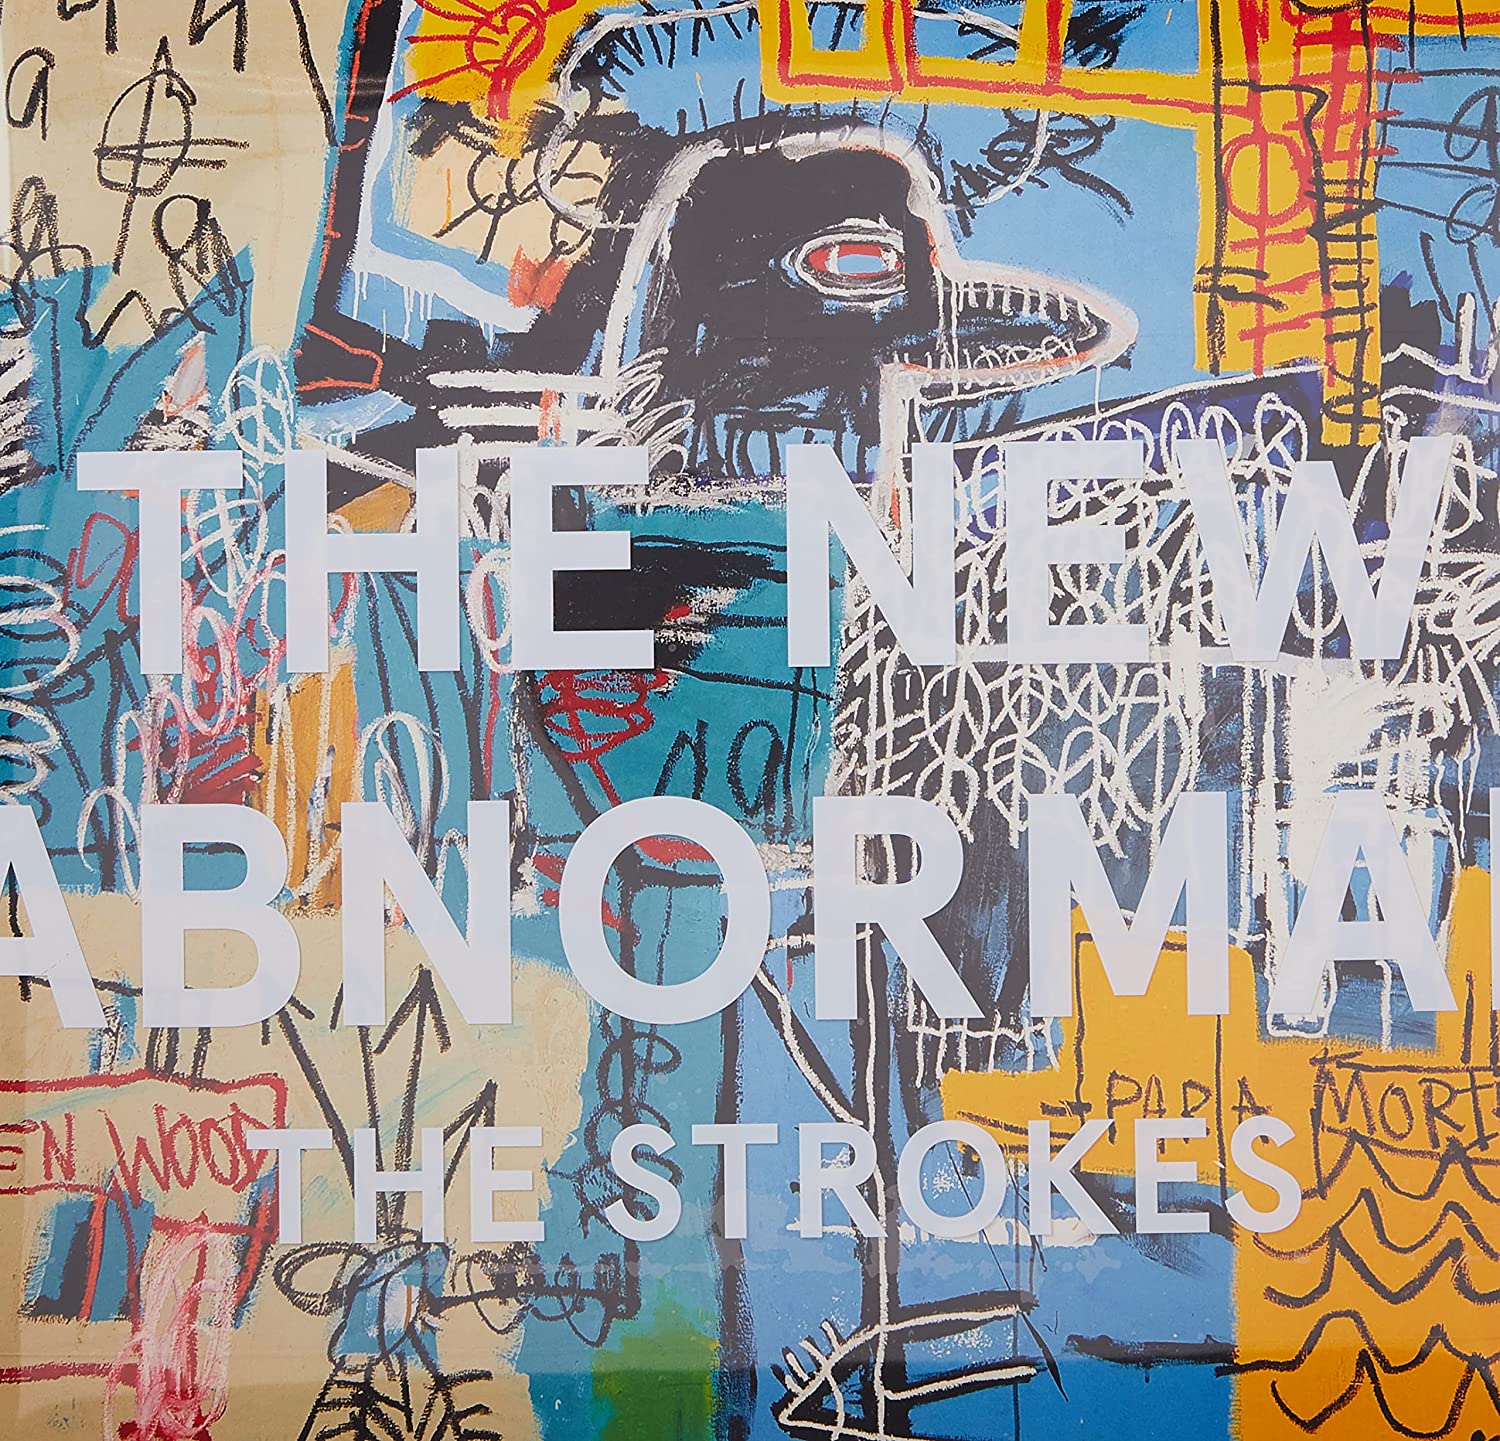 Strokes, The - New Abnormal